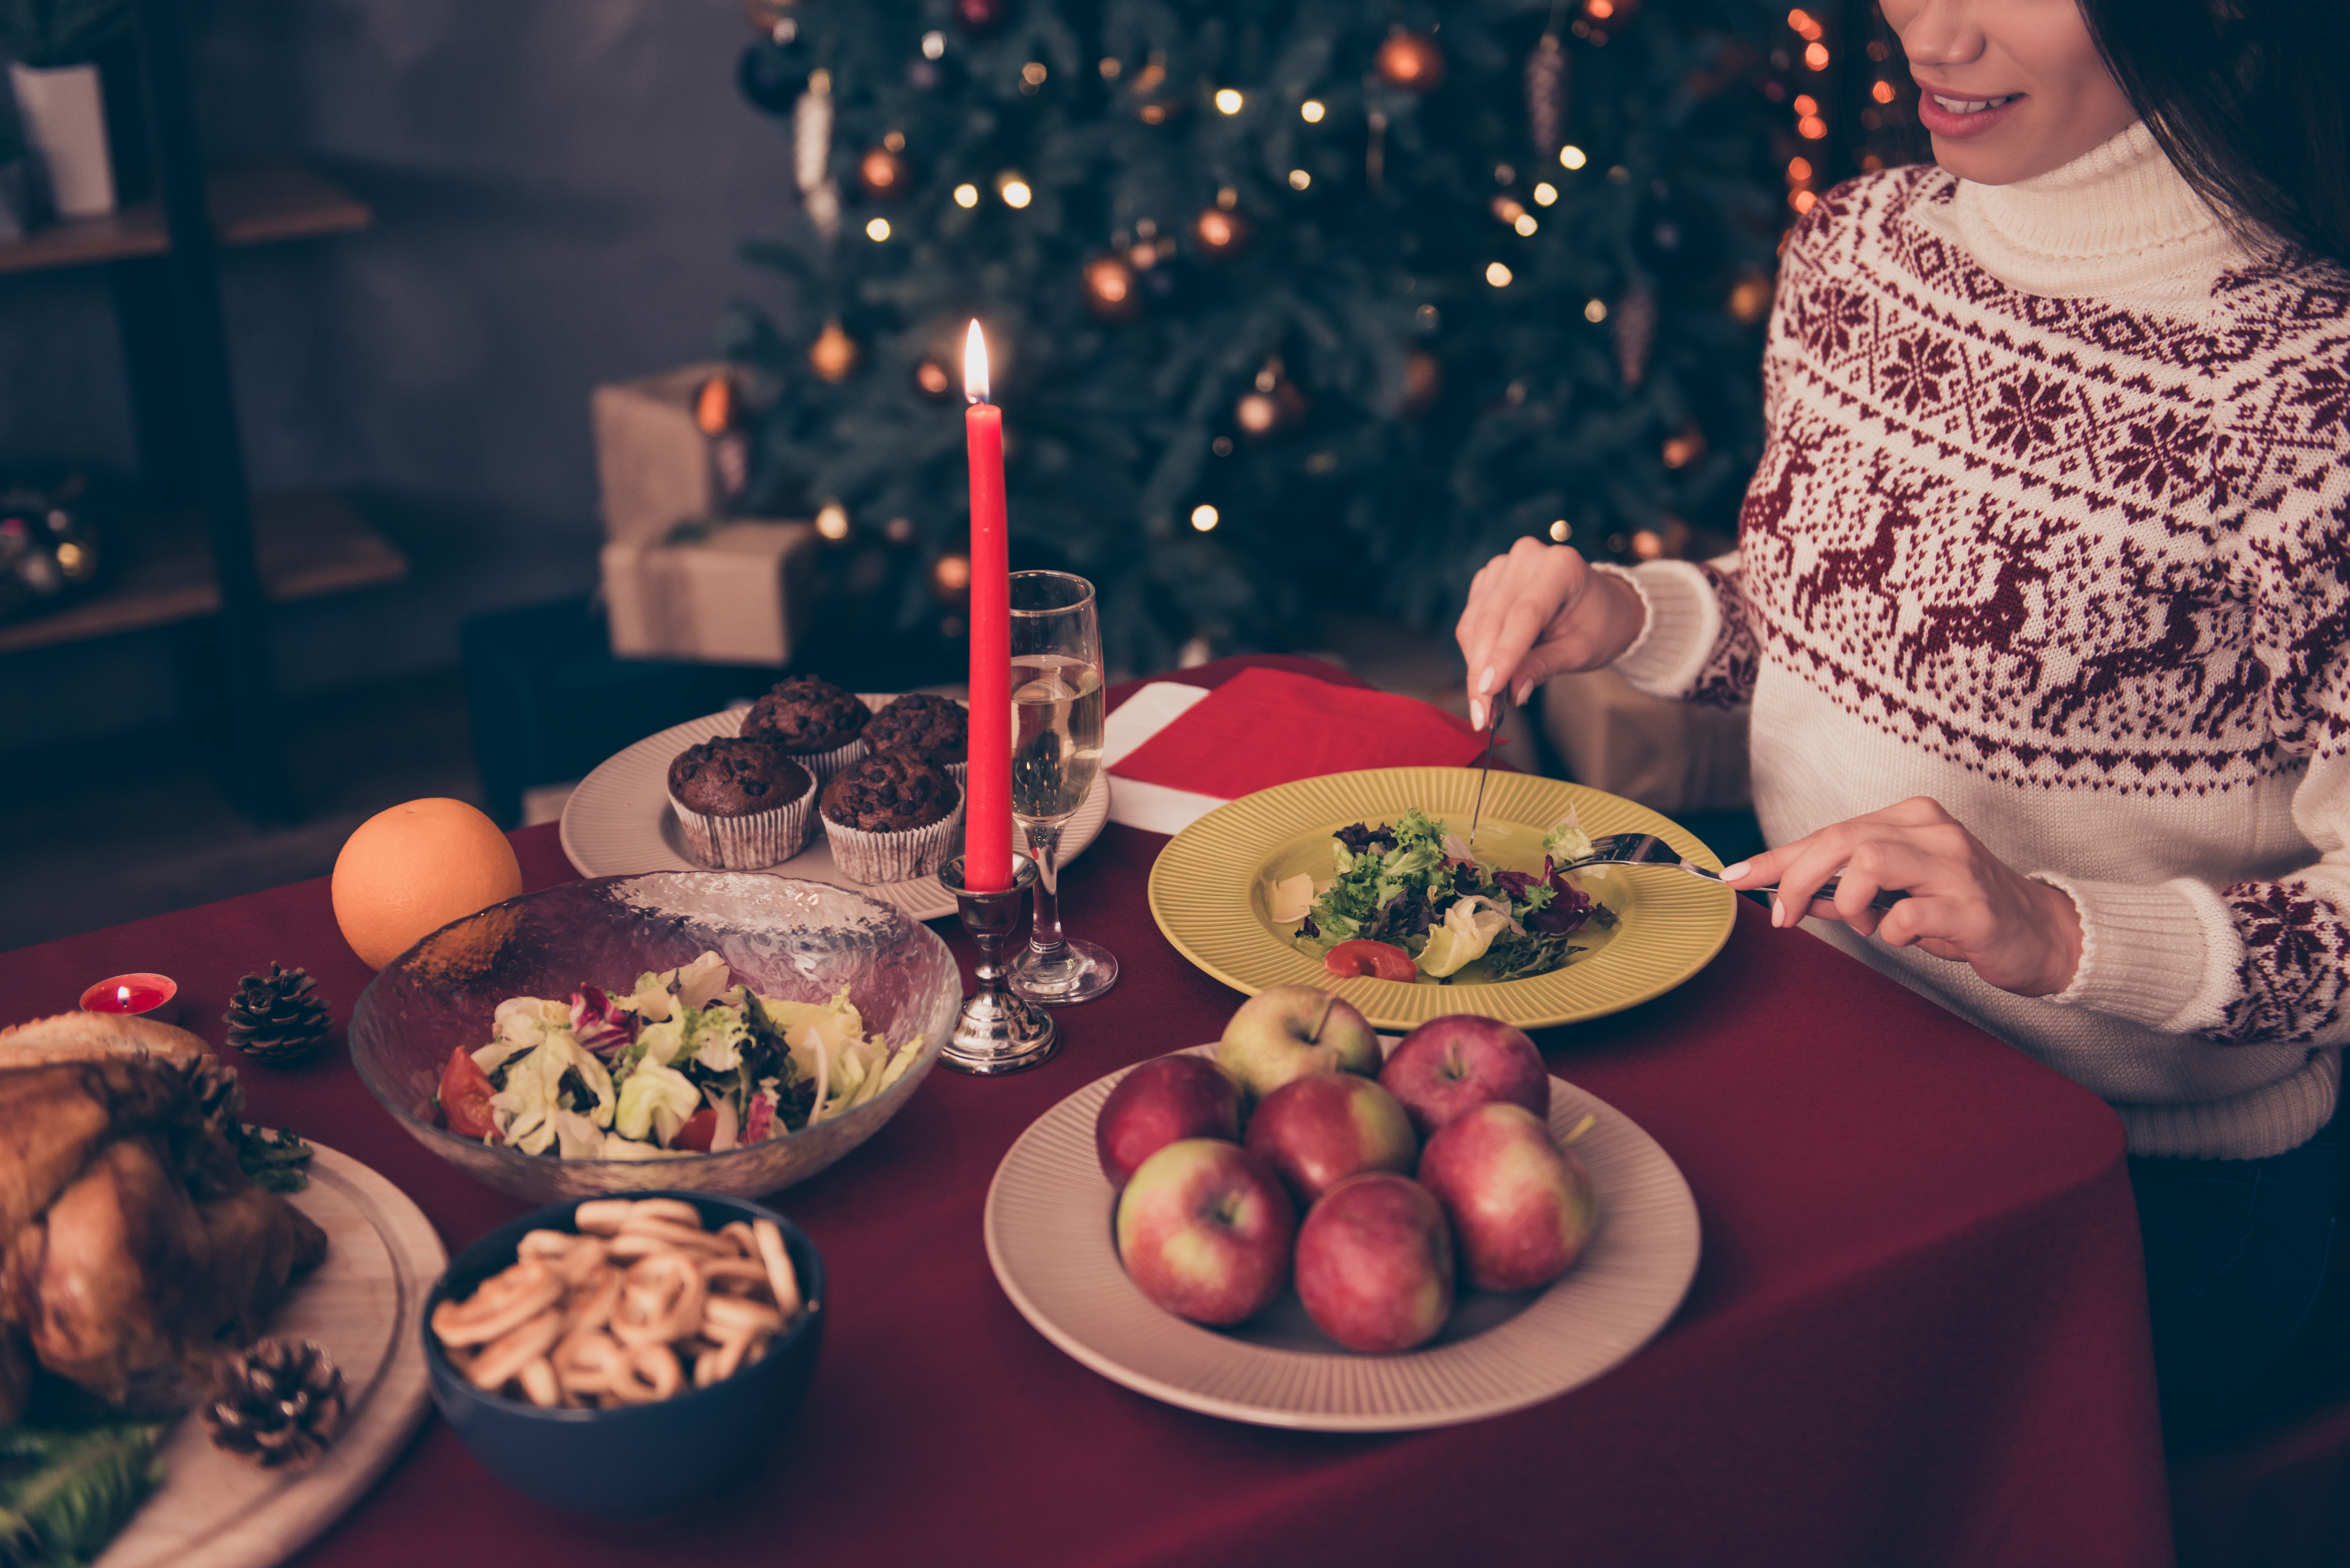 Une femme mangeant une salade lors d'un repas de Noël | Source : Shutterstock